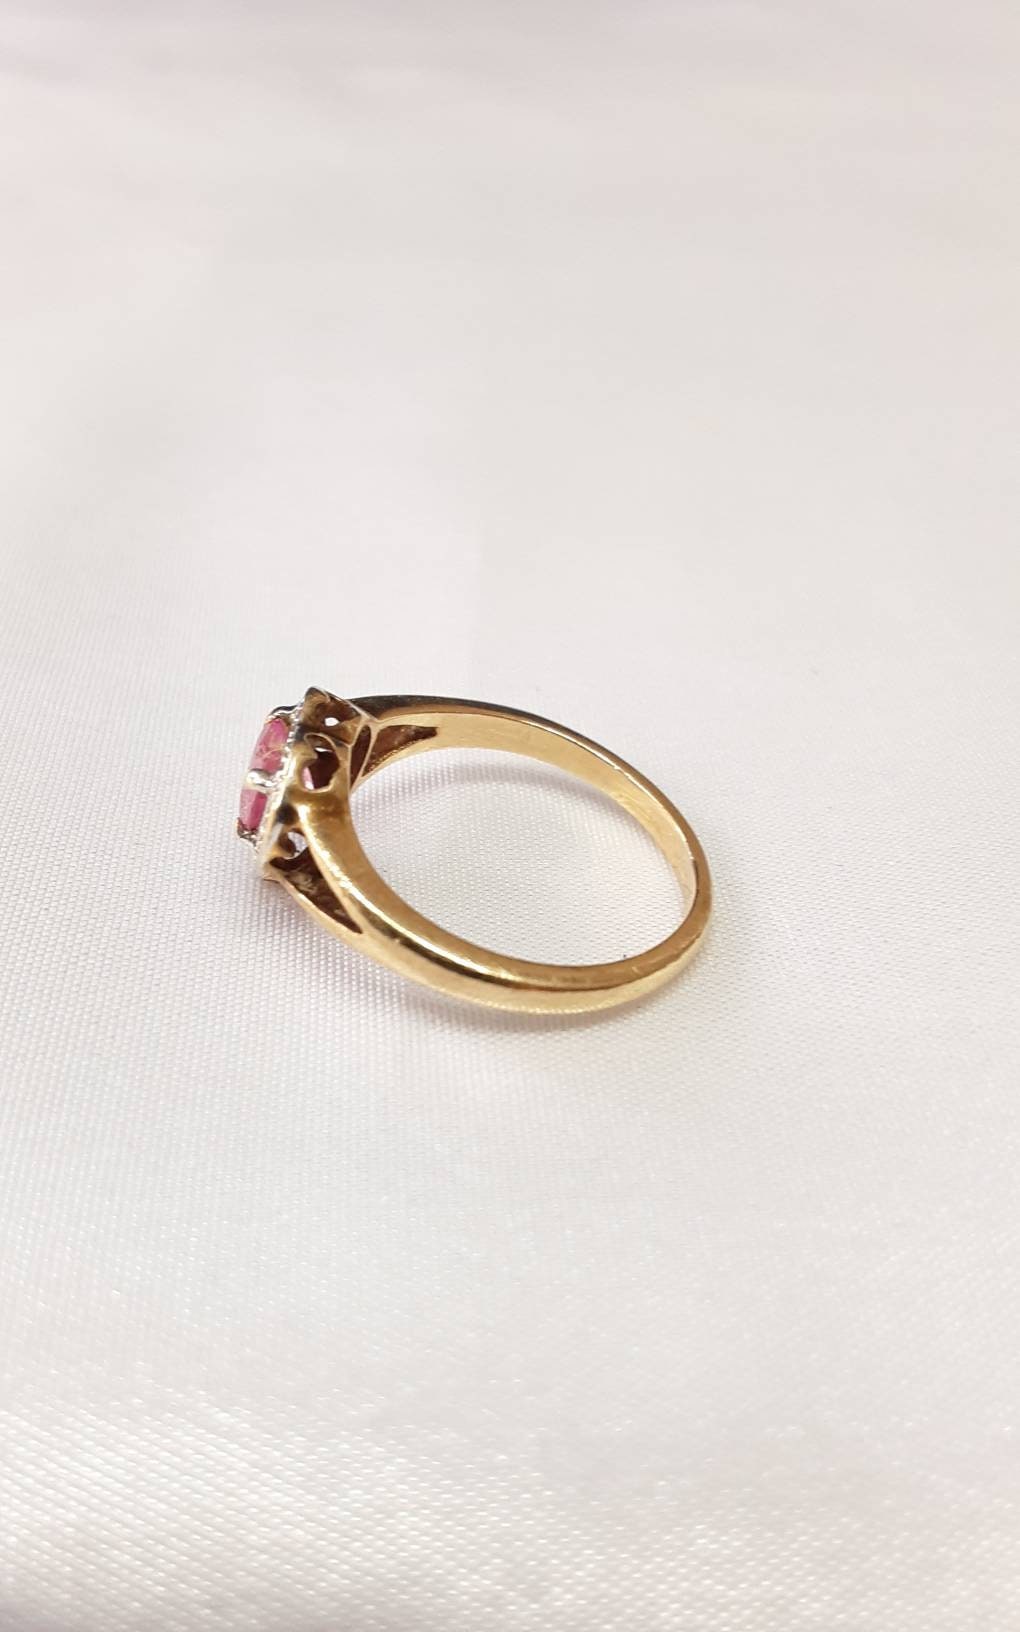 Beautiful Vintage 9ct Gold Diamond and Pink Topaz Ring. - Etsy UK